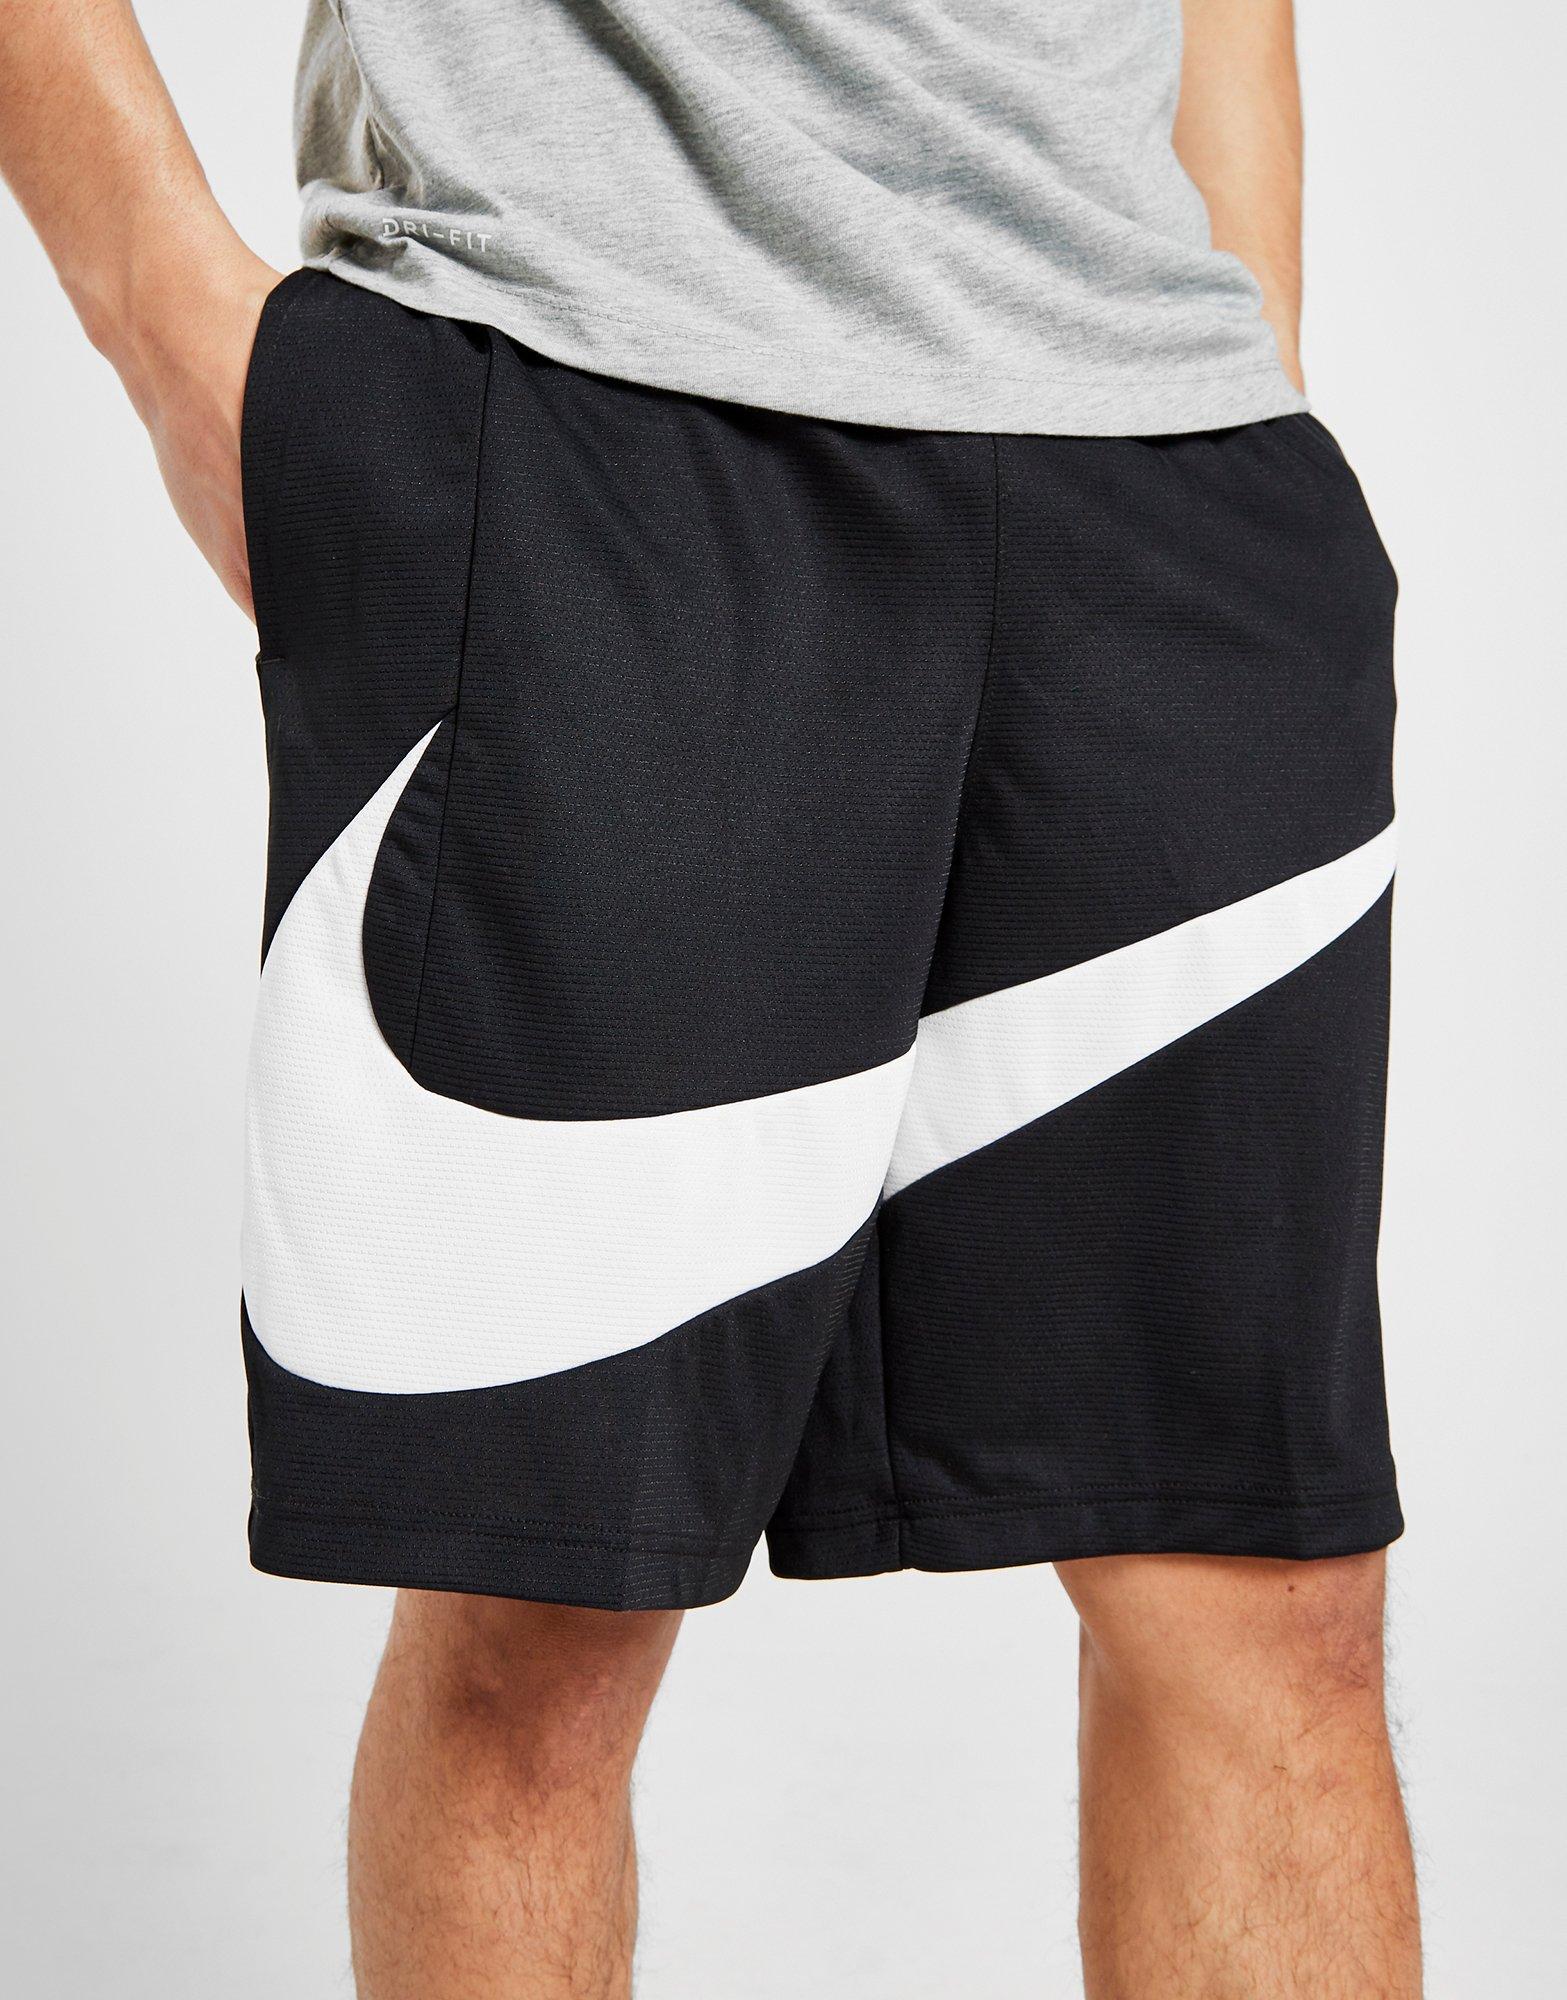 Acquista Nike Hybrid Basketball Shorts in Nero